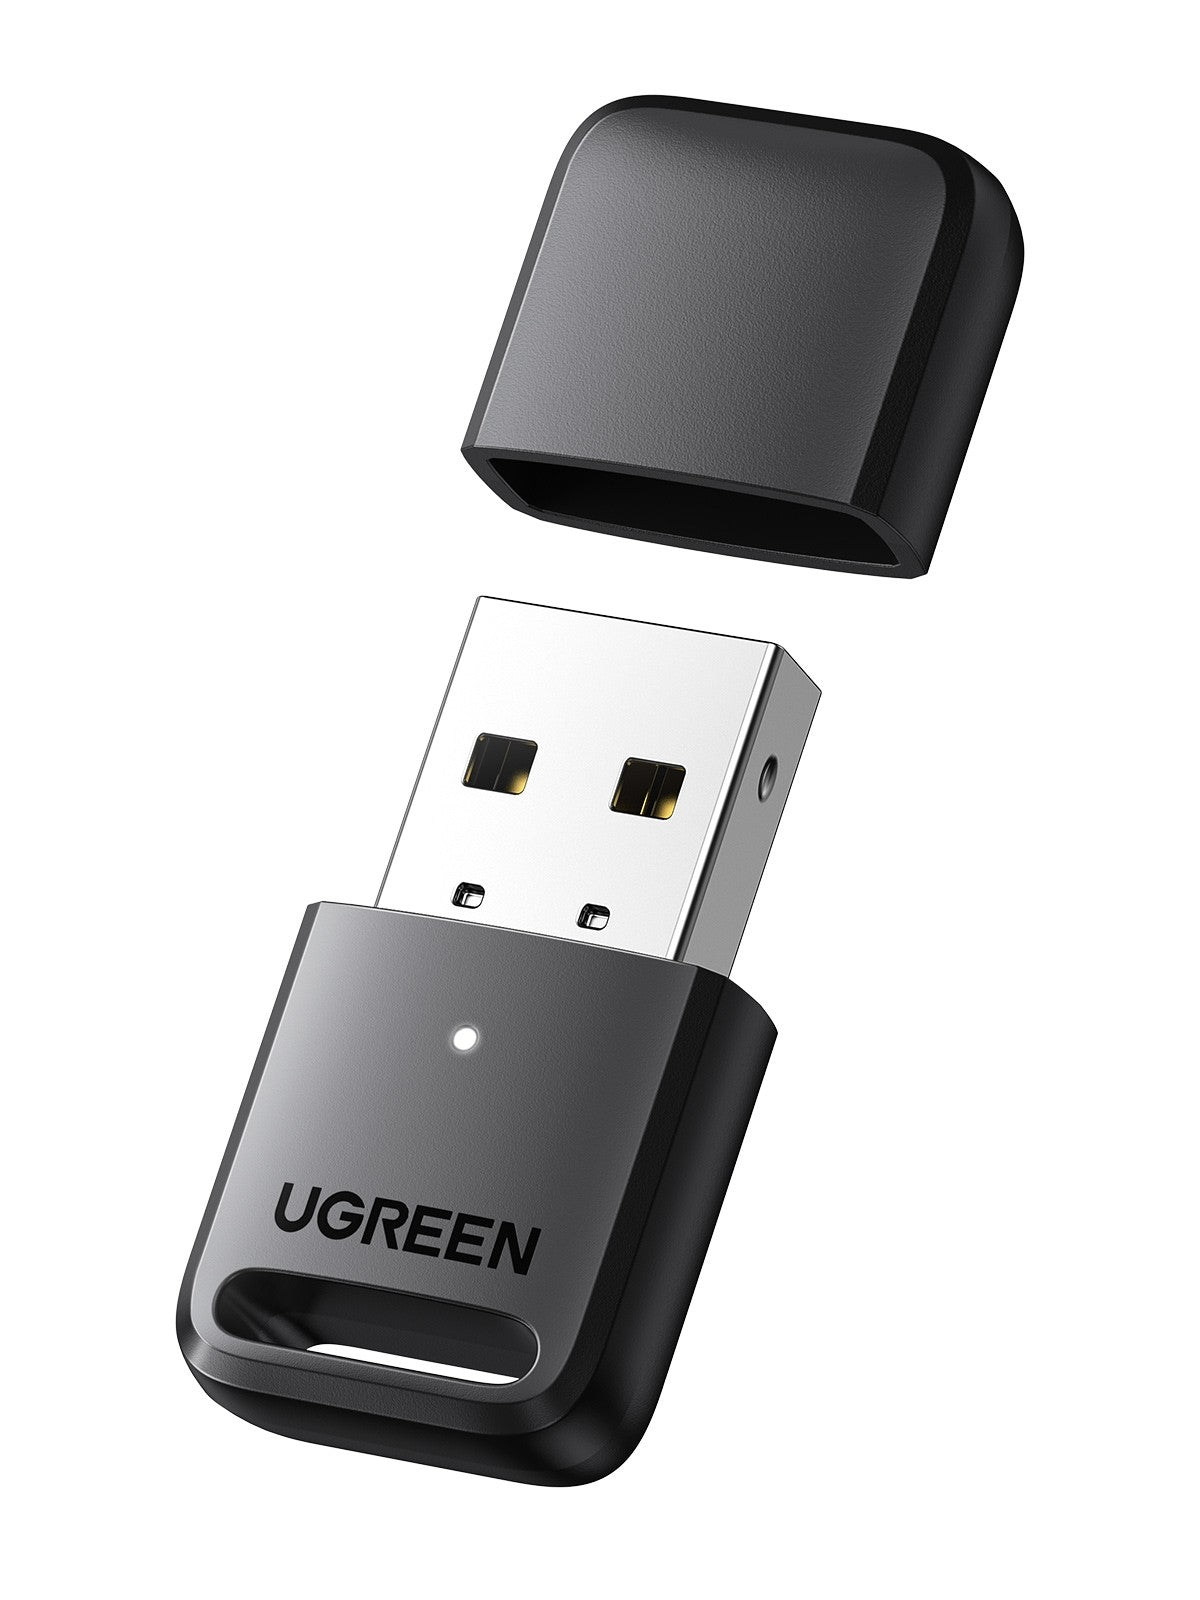 UGREEN USB Bluetooth 5.0 Dongle/Adaptor/Receiver for PC Laptop Desktop Computer Long Range 20M